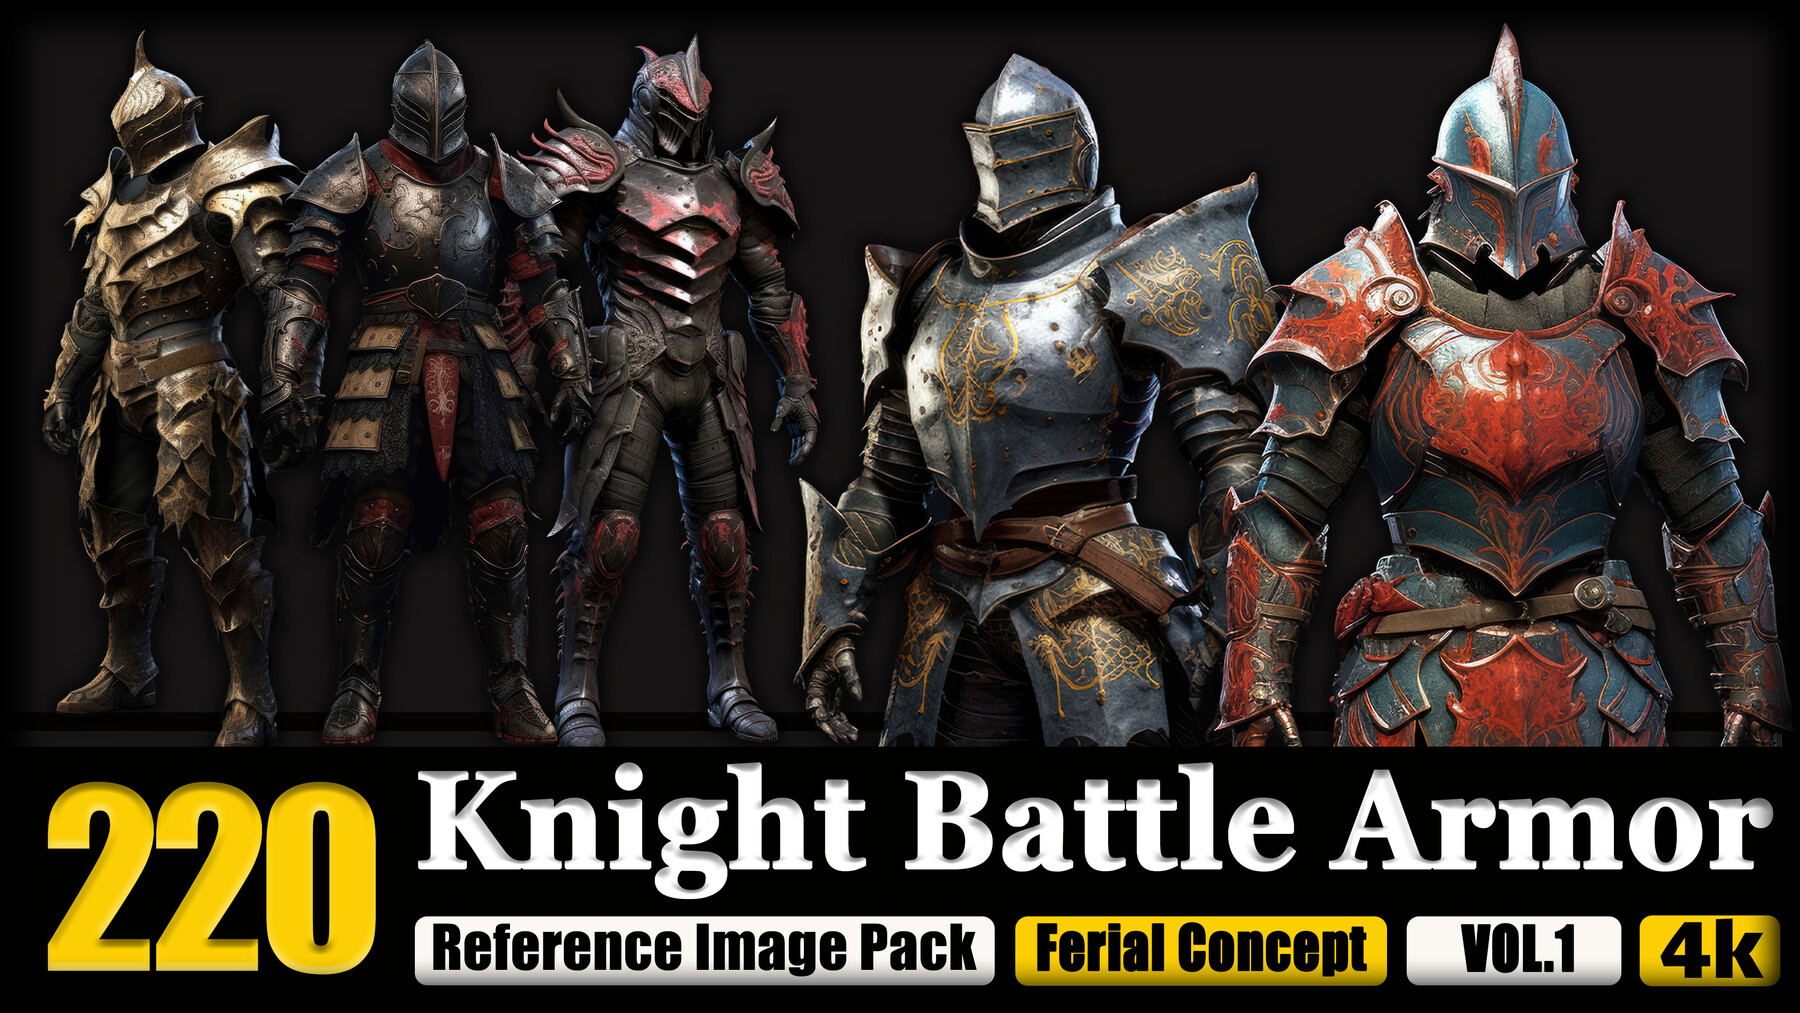 ArtStation - 220 Knight Battle Armor Reference Image Pack v.1 | Artworks